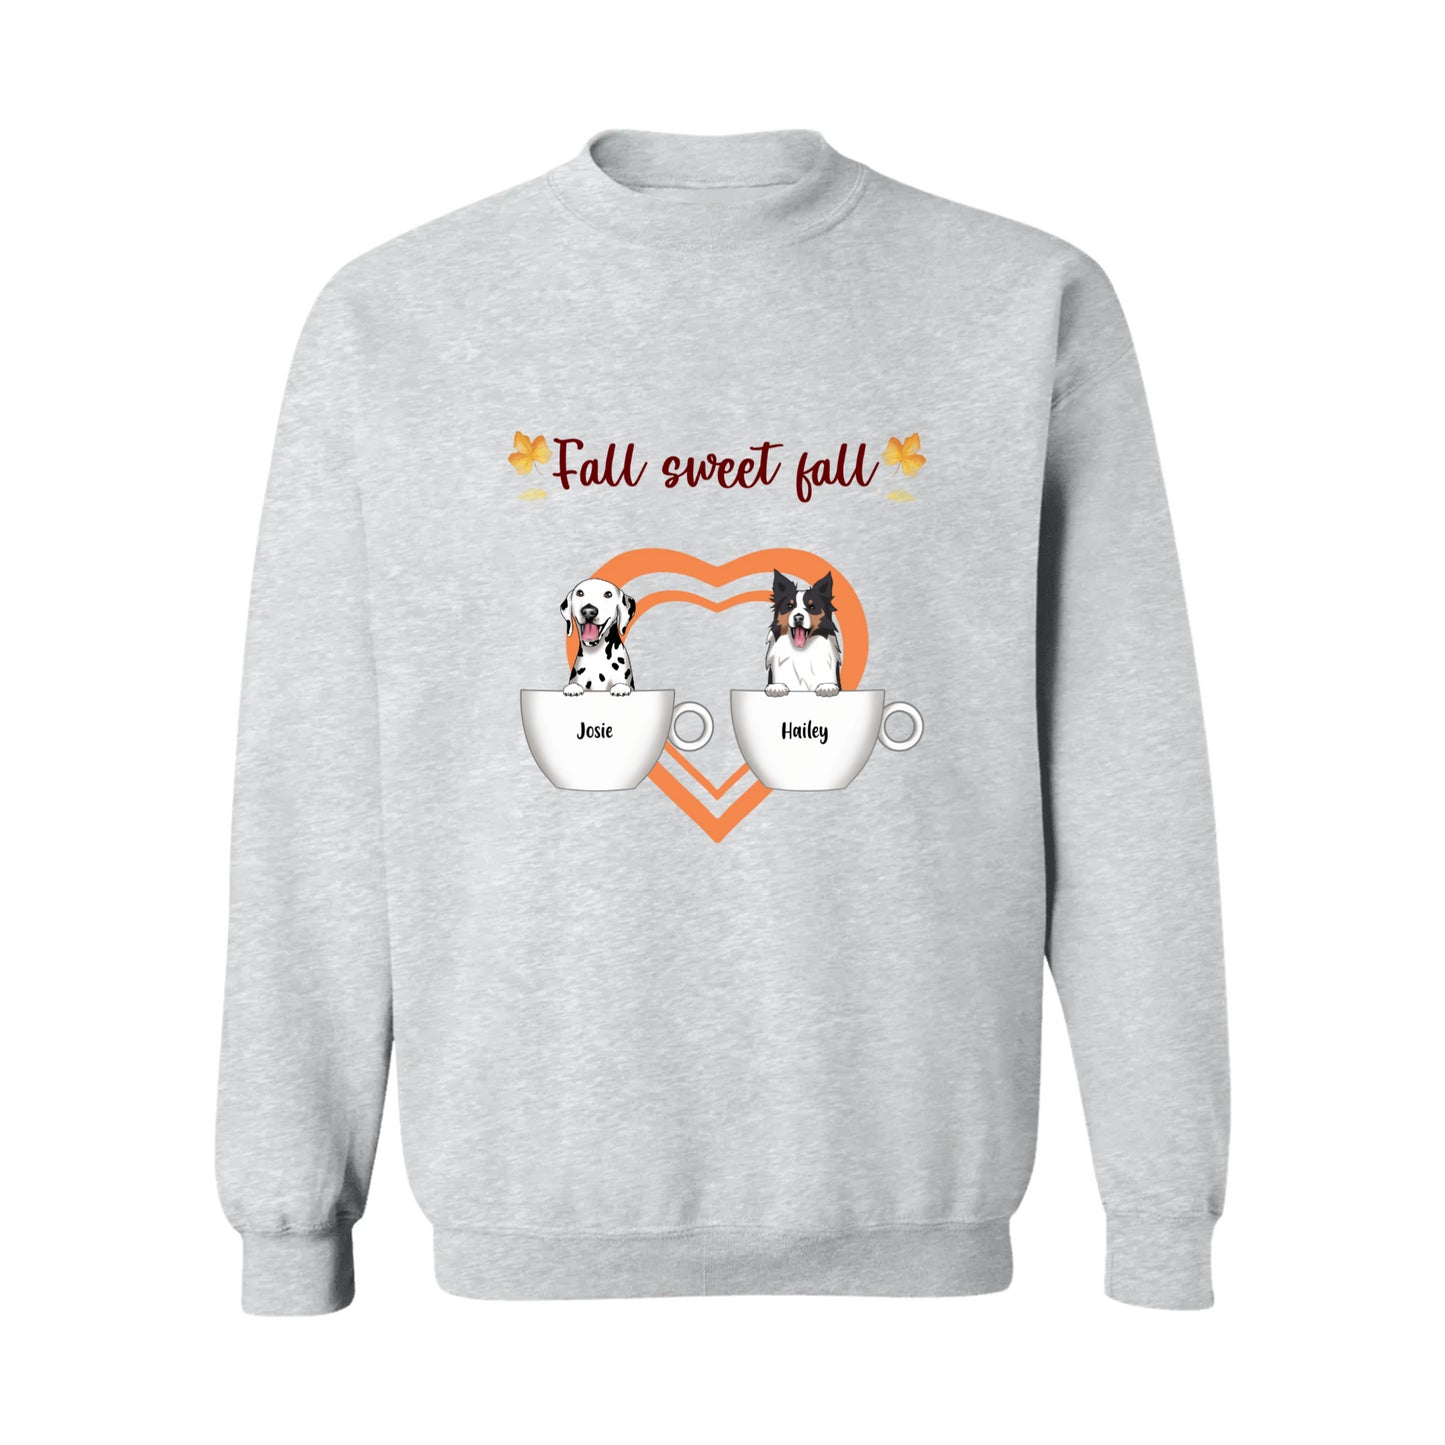 Fall Sweet Fall Personalized Dog Crewneck Pullover Sweatshirt